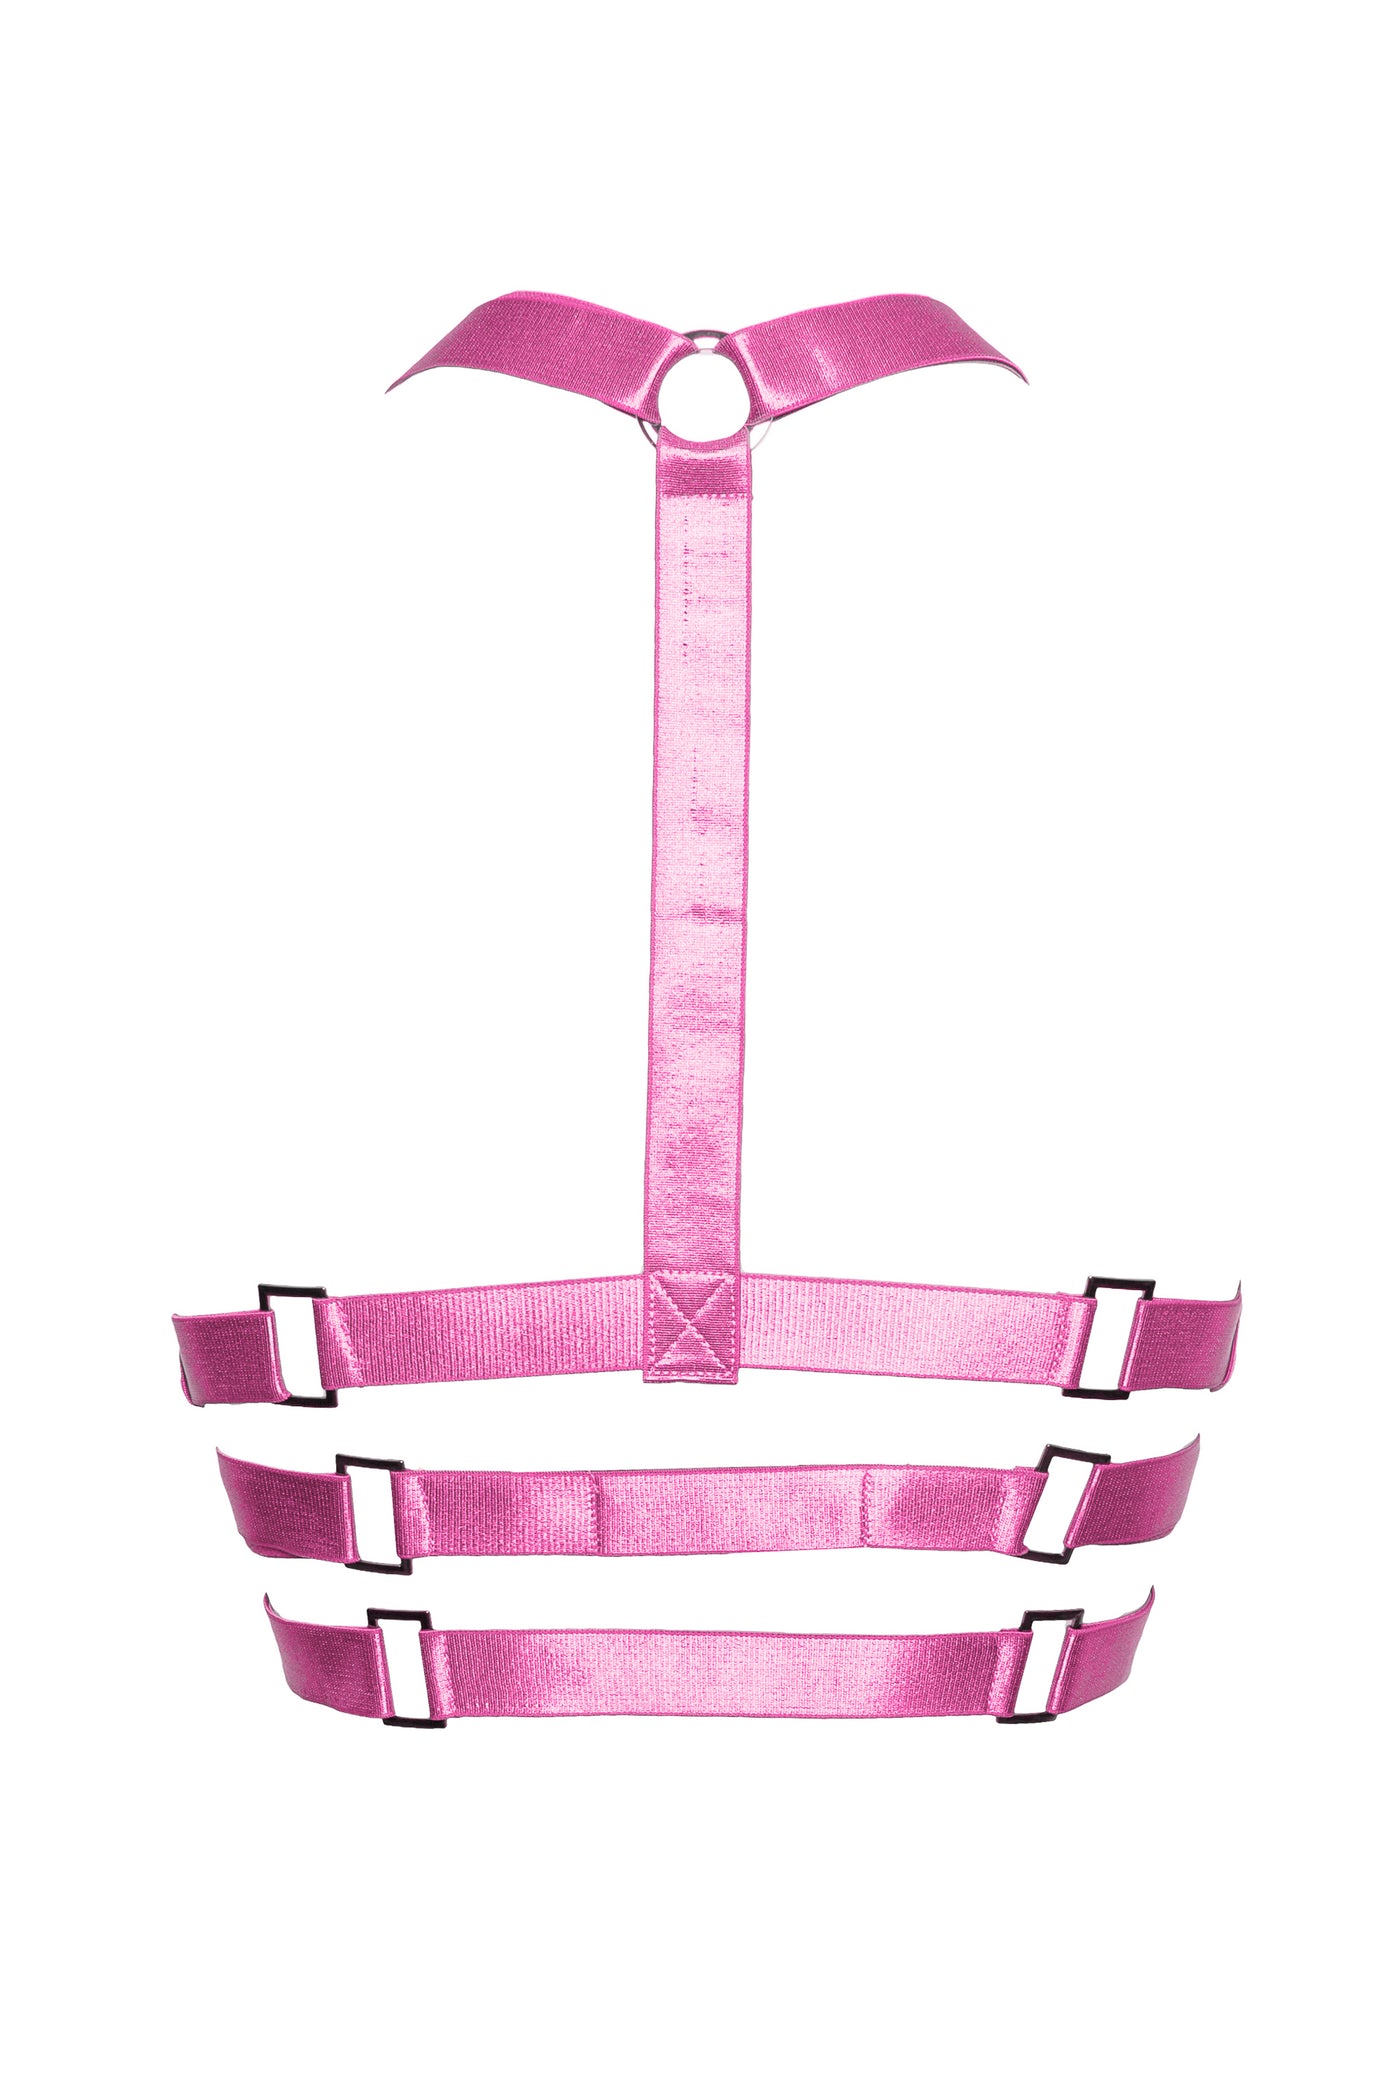 Devils Spine Harness - Candy Pink